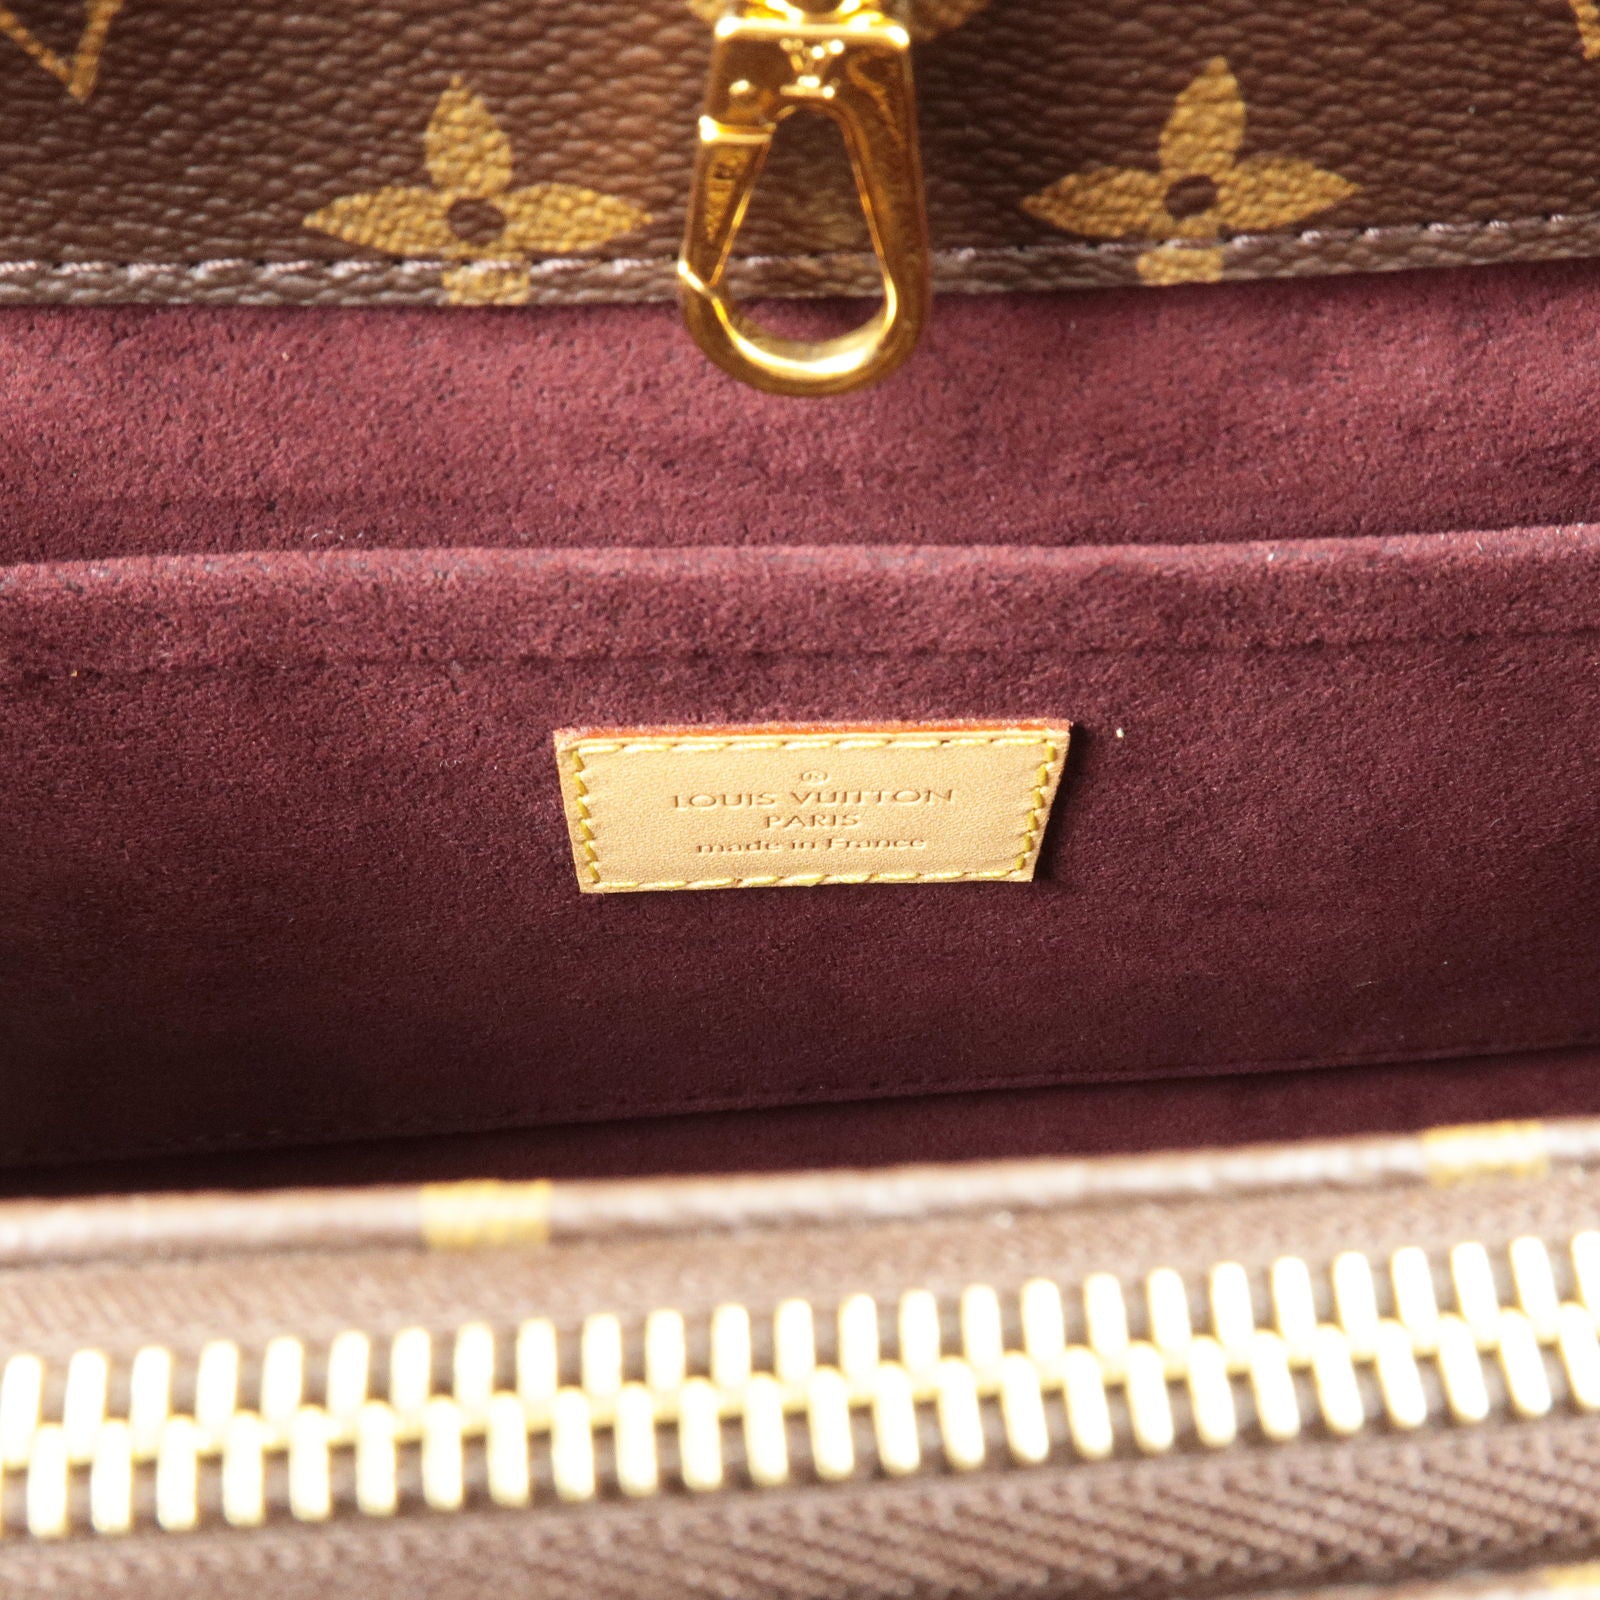 Louis Vuitton Shoulder Bag Montaigne Bb 2Way Black Leather Used